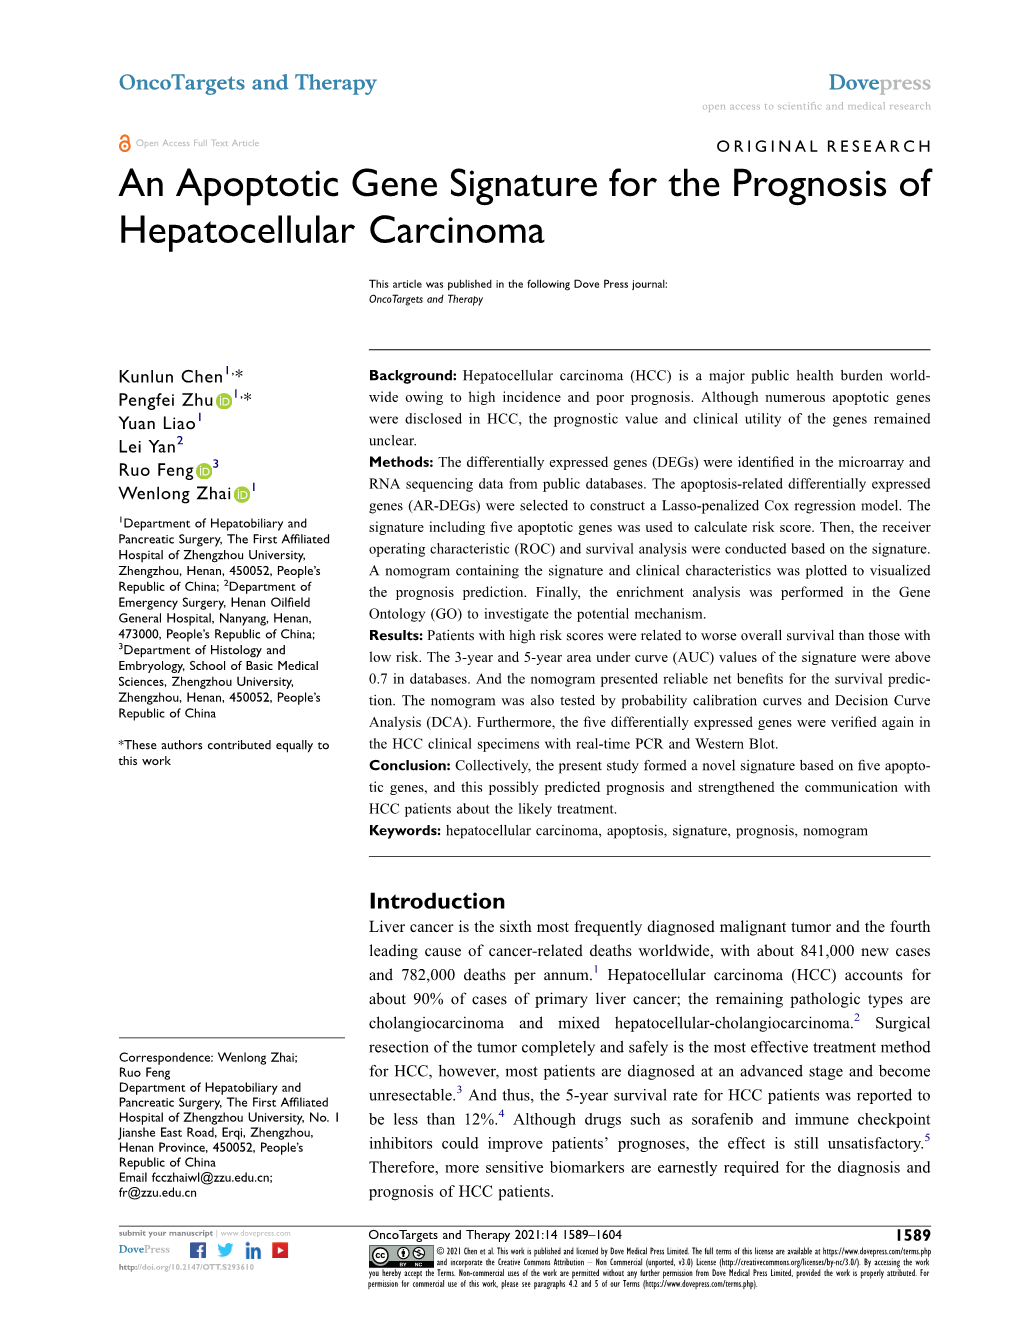 An Apoptotic Gene Signature for the Prognosis of Hepatocellular Carcinoma